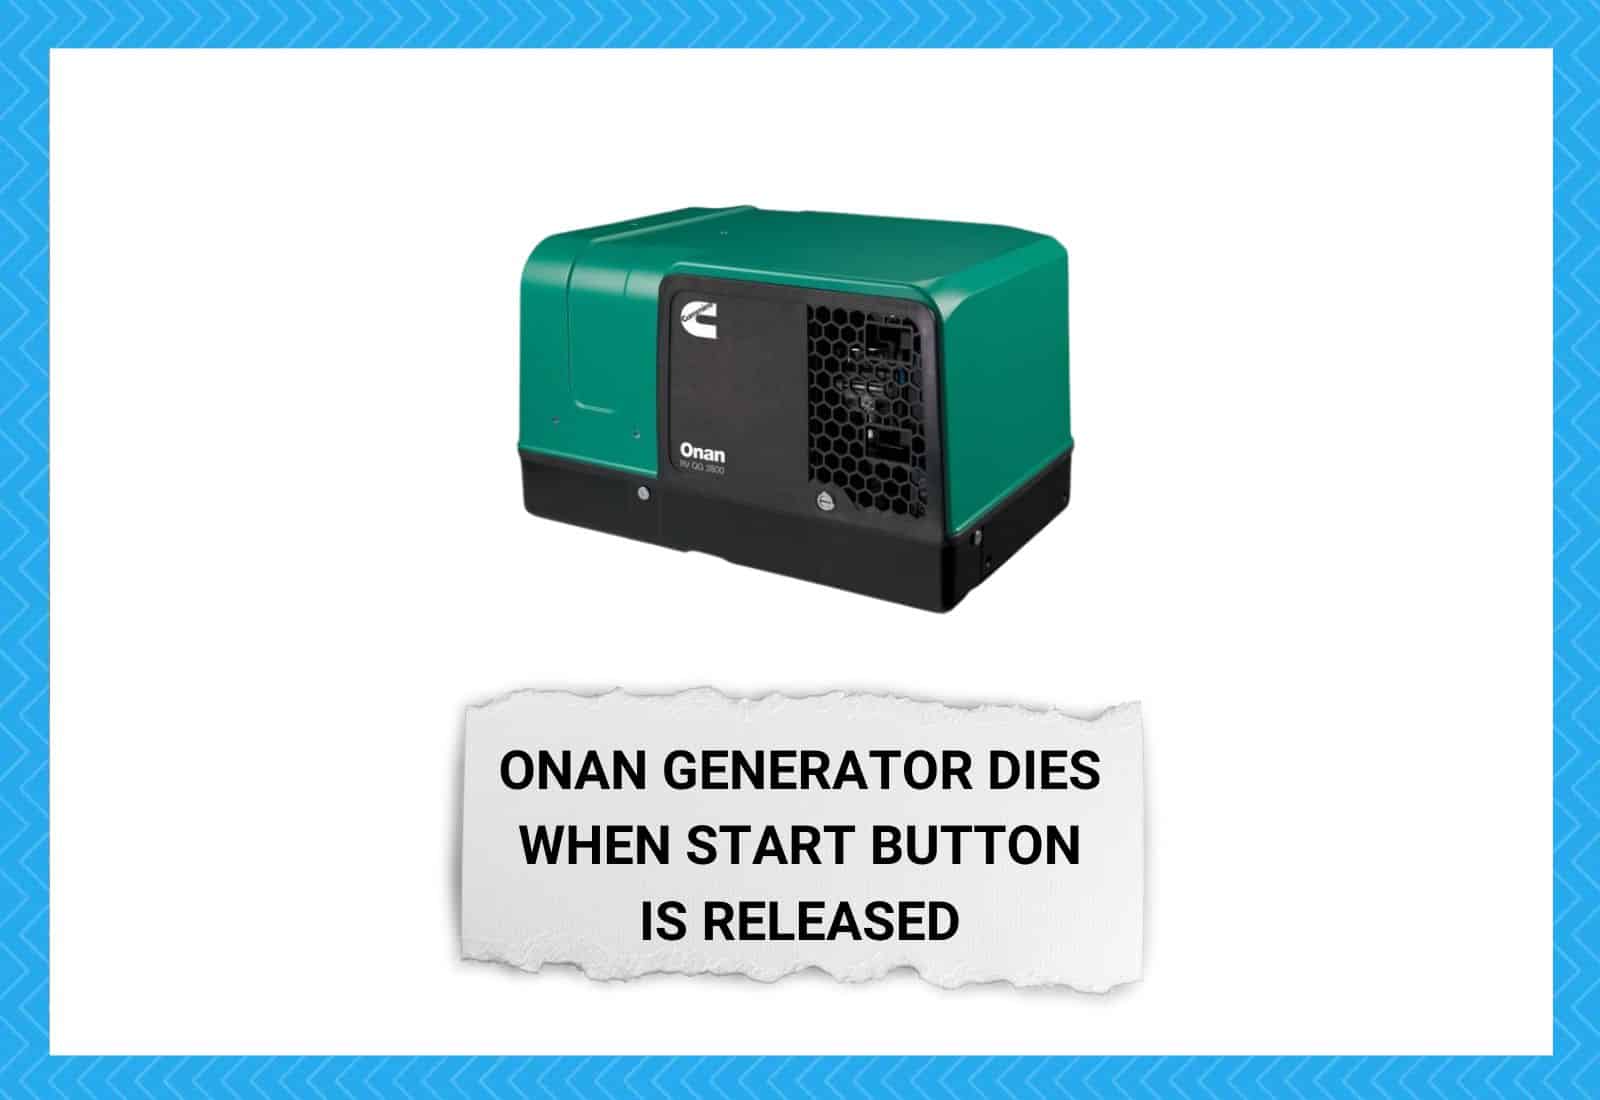 Onan Generator Dies When Start Button Is Released